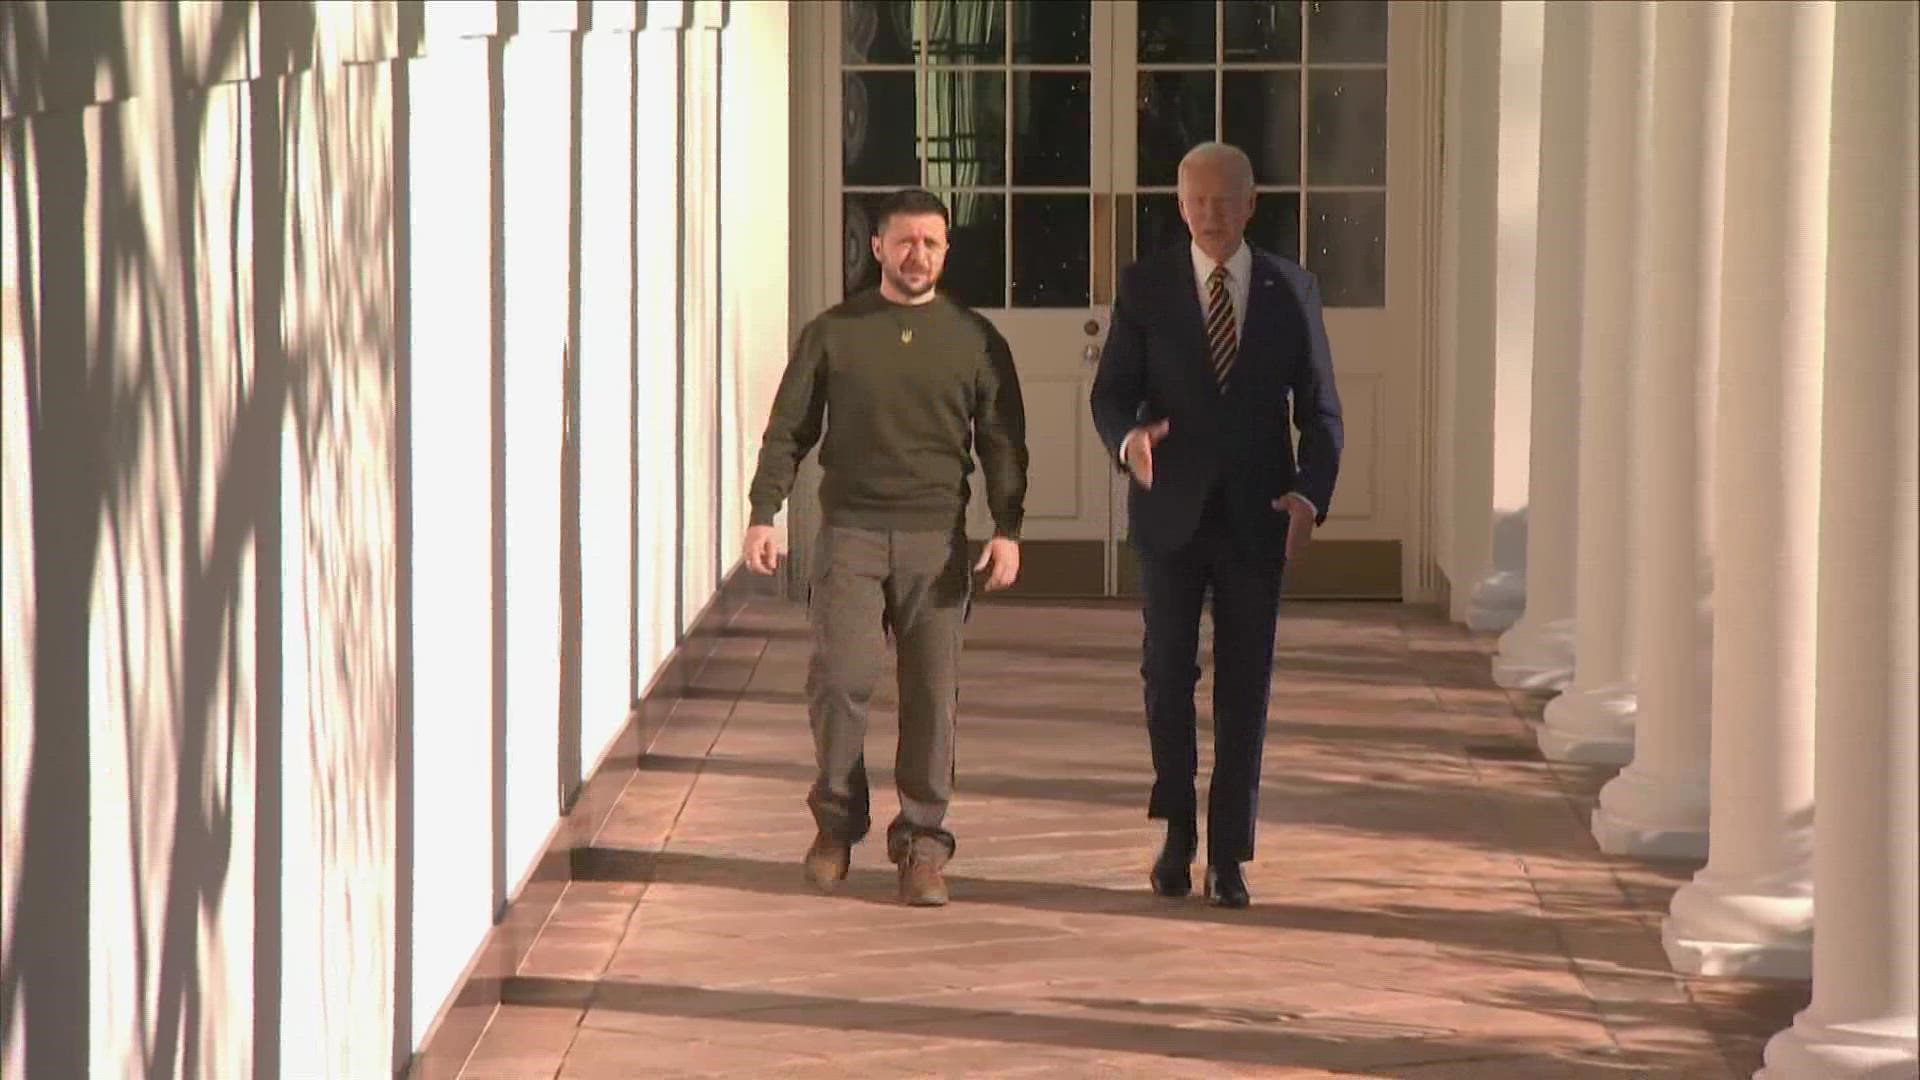 Zelenskyy and Biden walking